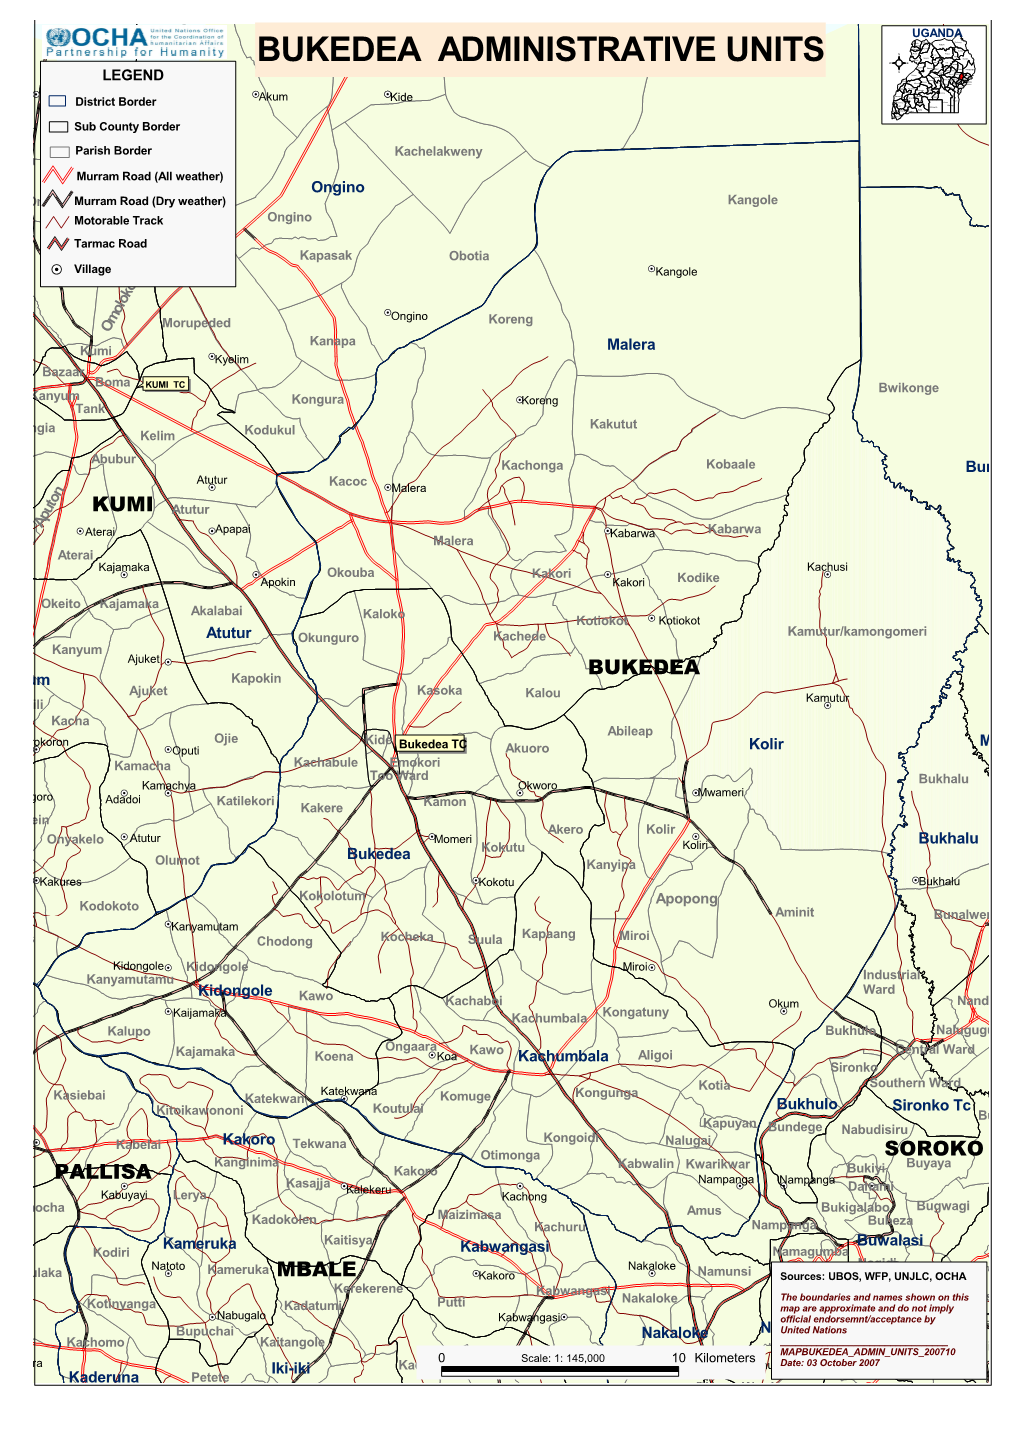 Bukedea Administrative Units